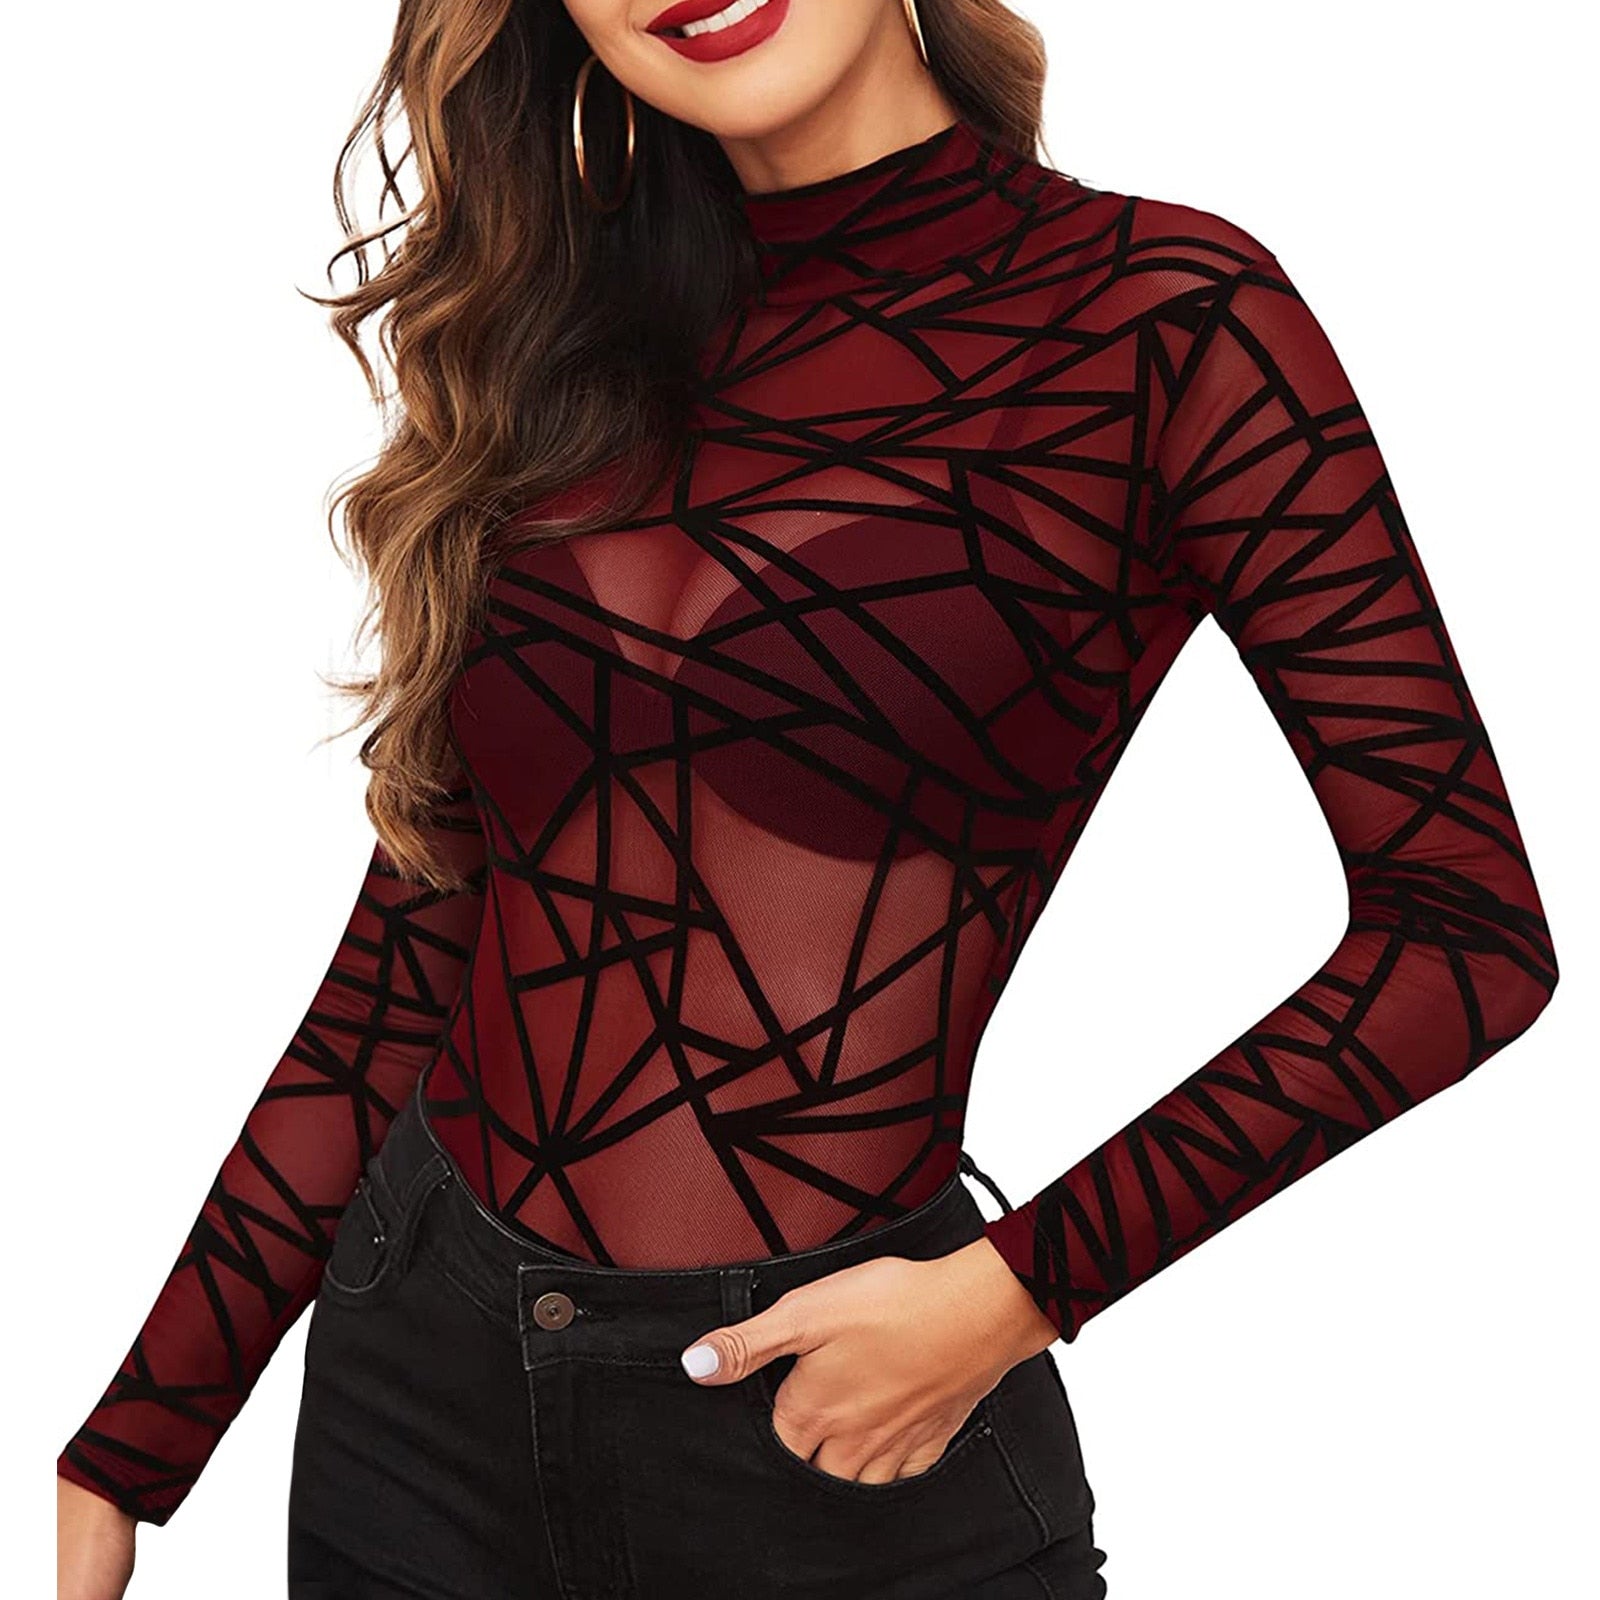 Geometric Print Bodysuit - Red & Black Sheer Geometric Print bodysuit - Red & Black Vamp Bodysuit - Dark Red & Black bodysuit